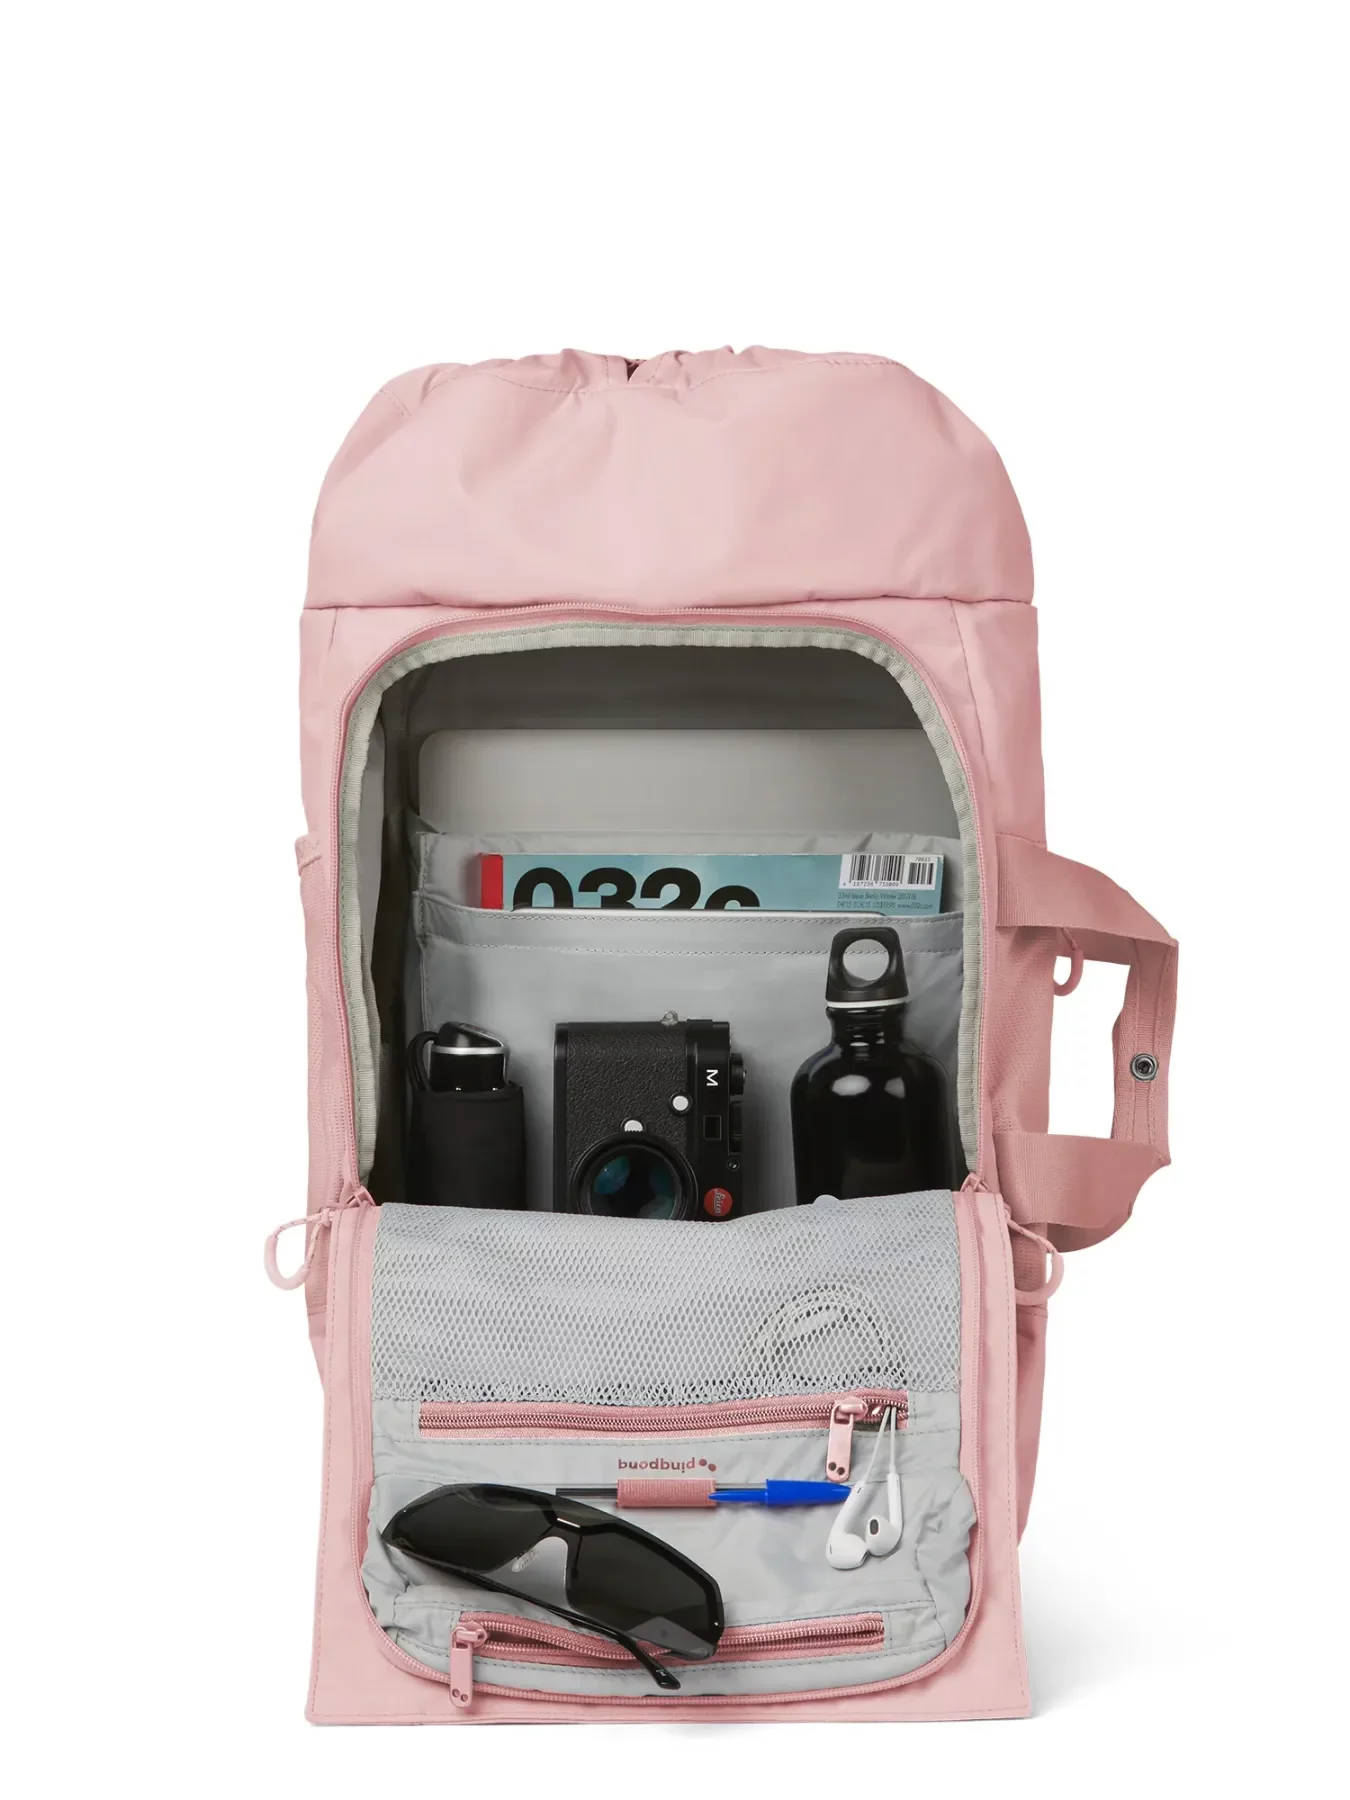 pinqponq Backpack BLOK medium - Ash Pink 8